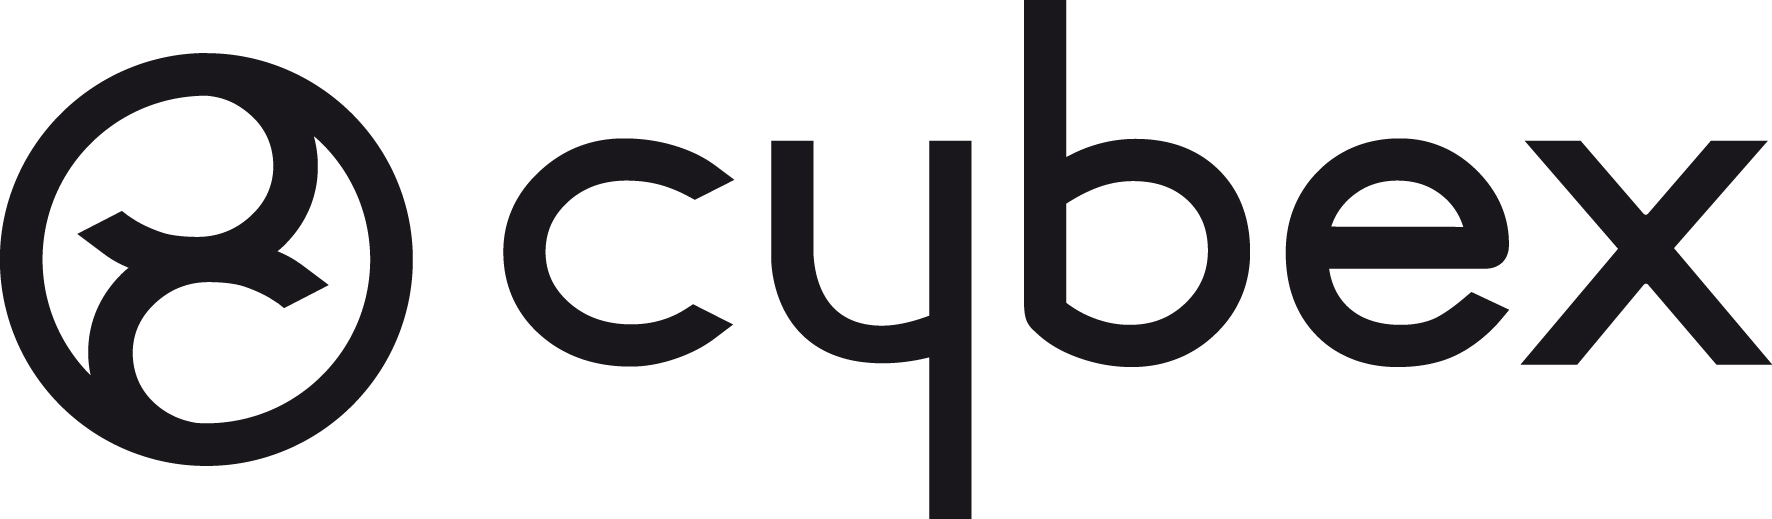 logotipo cybex